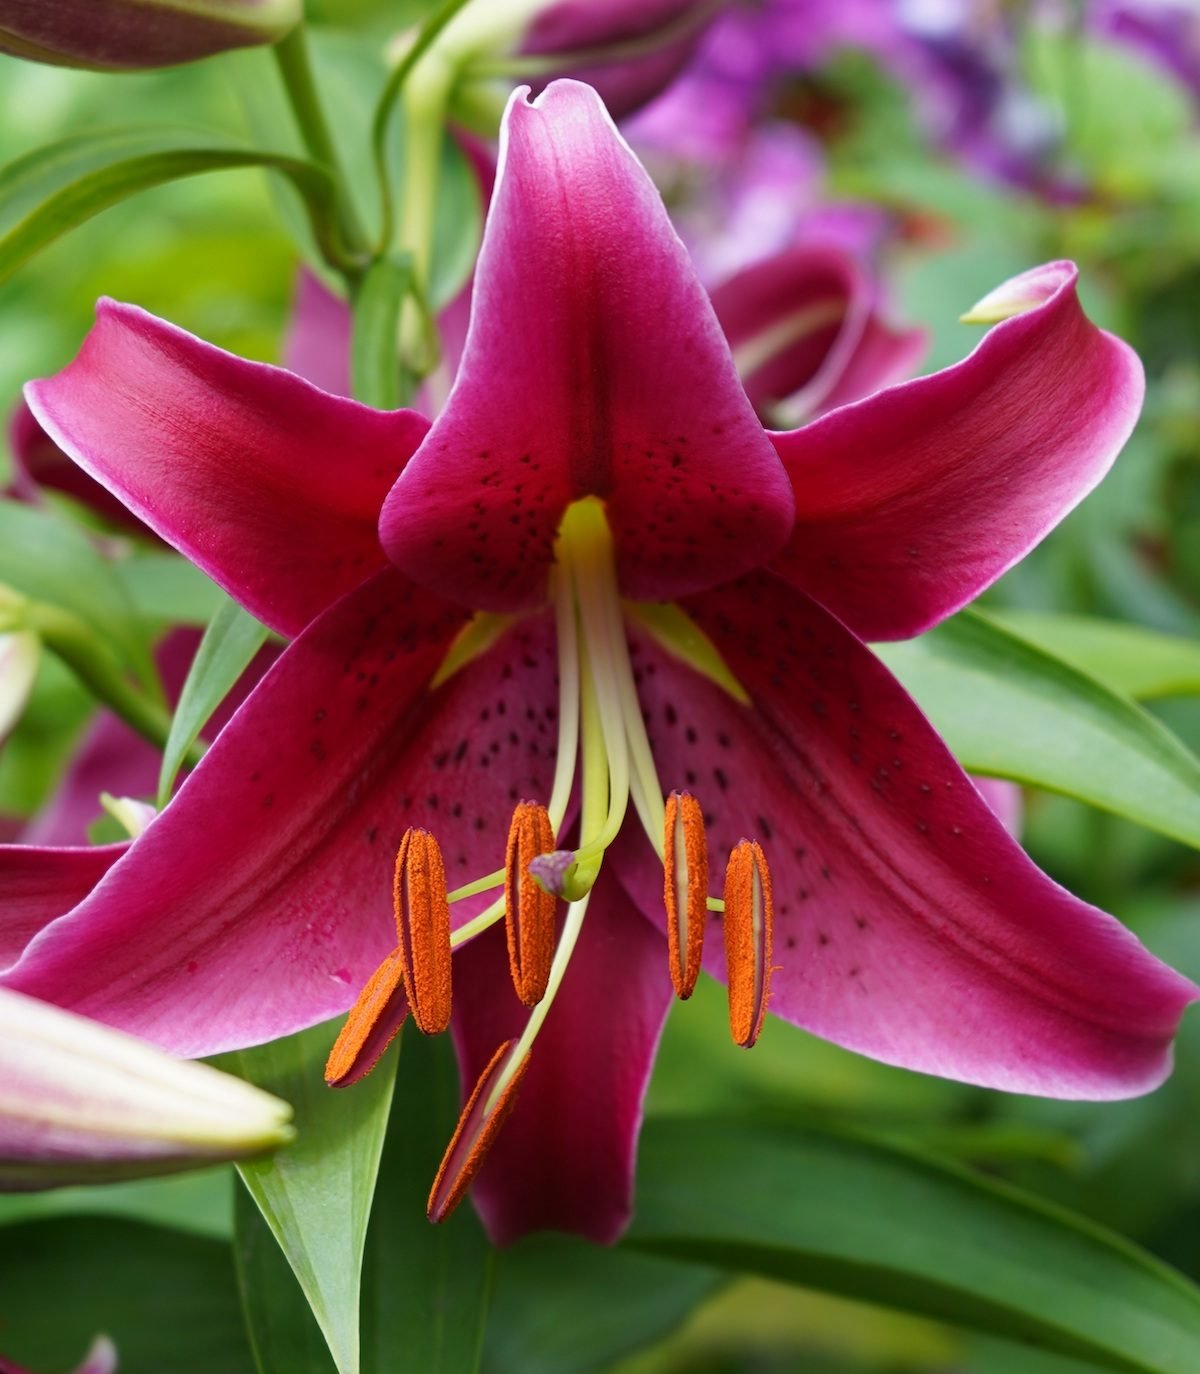 Grow Oriental Lilies for Outstanding Garden Color